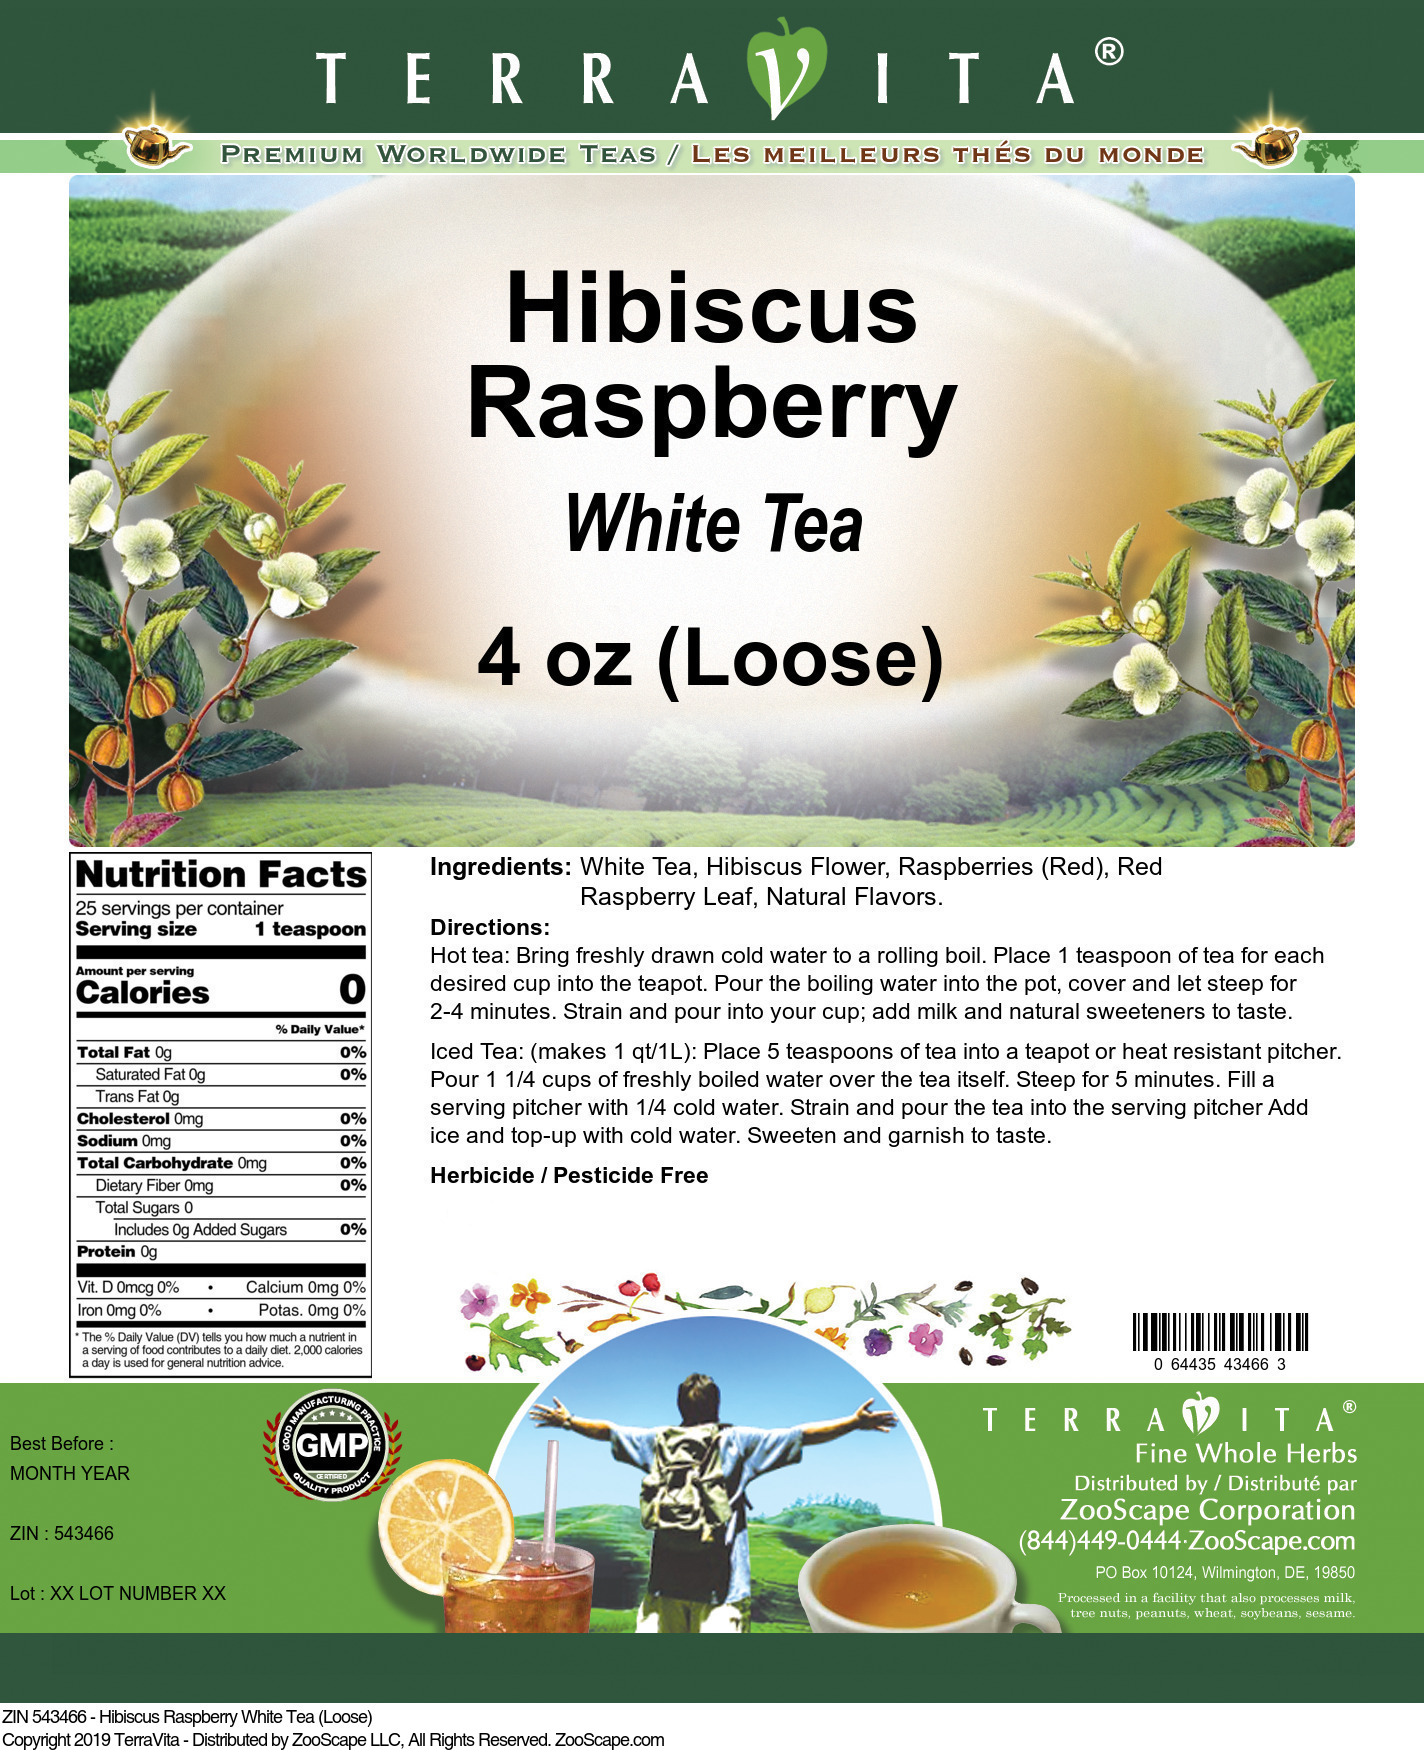 Hibiscus Raspberry White Tea (Loose) - Label